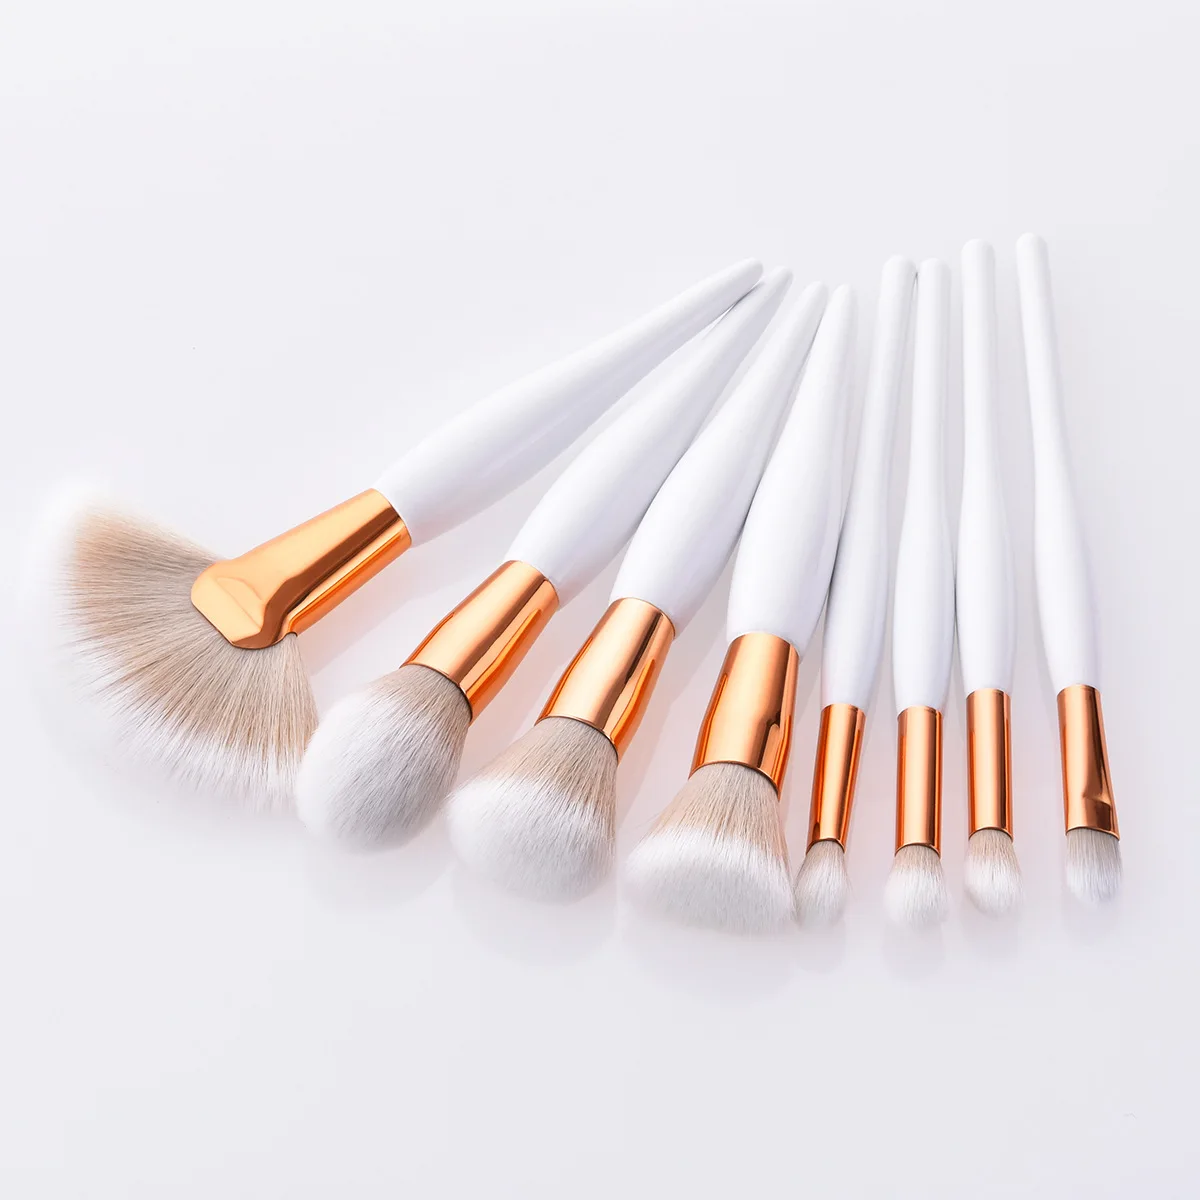 4/8 Pcs Makeup Brush Kit Soft Synthetic Hair Wood Handle Make Up Brushes Foundation Powder Blush Eyeshadow Cosmetic Makeup Tools